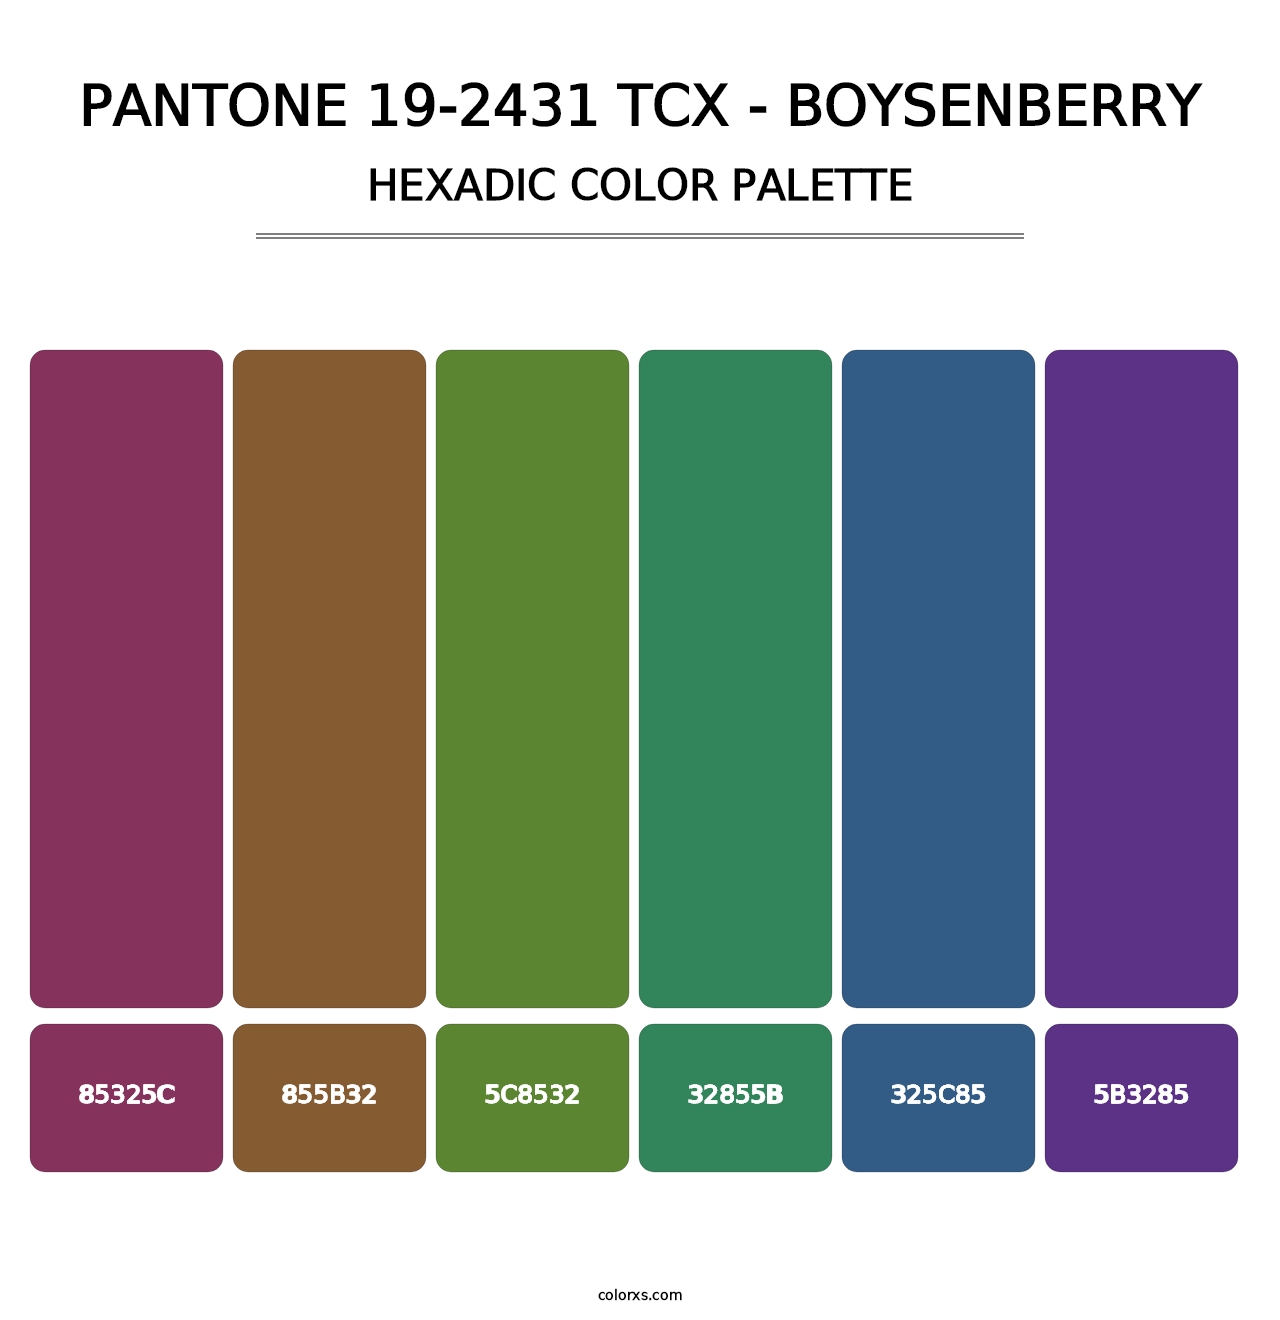 PANTONE 19-2431 TCX - Boysenberry - Hexadic Color Palette